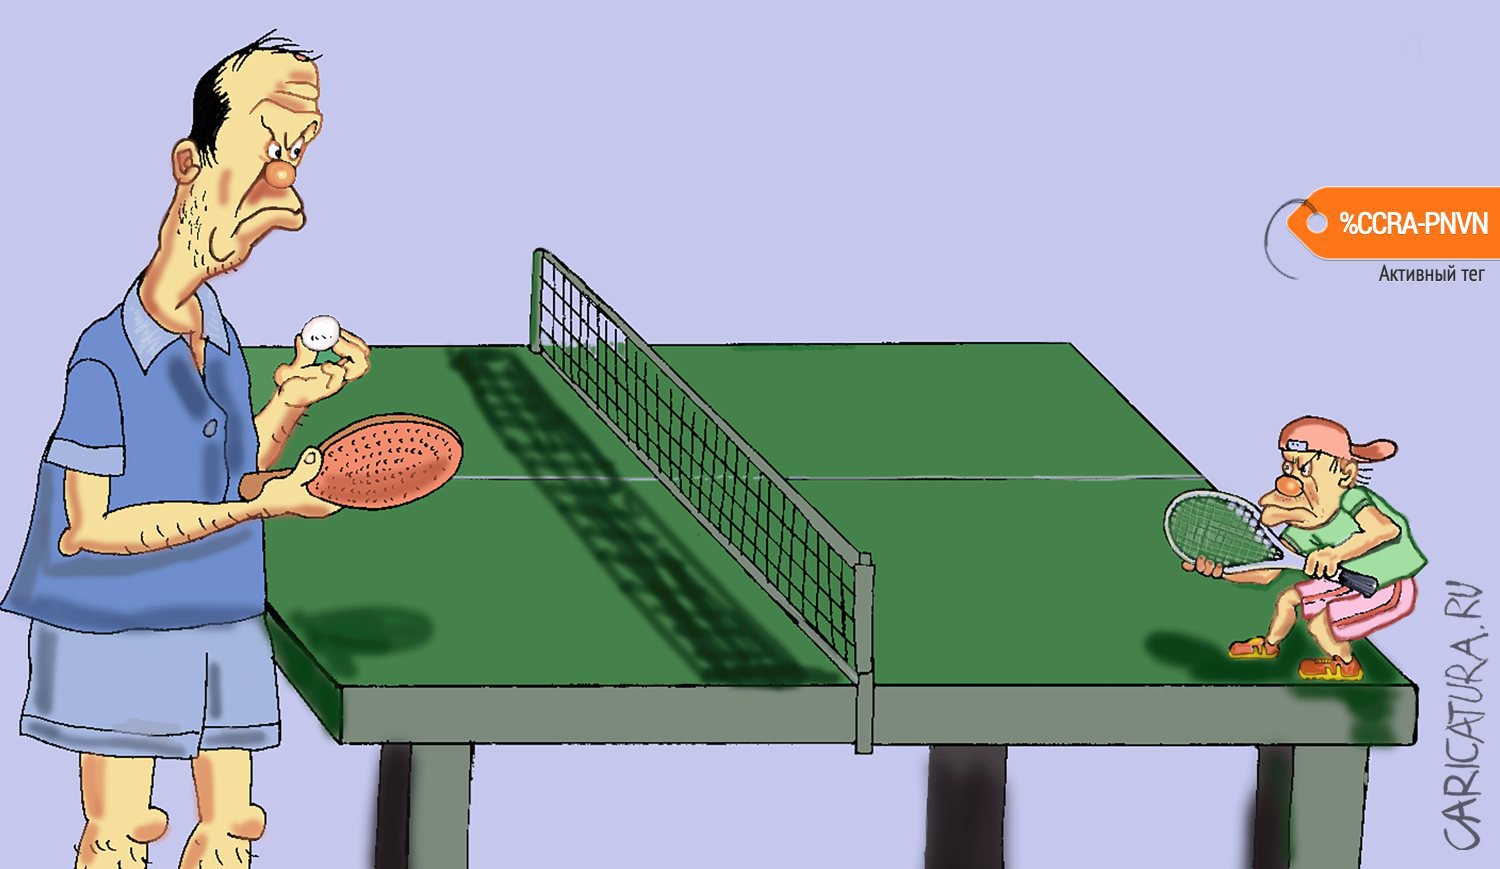 Карикатура "Теннис", Булат Ирсаев